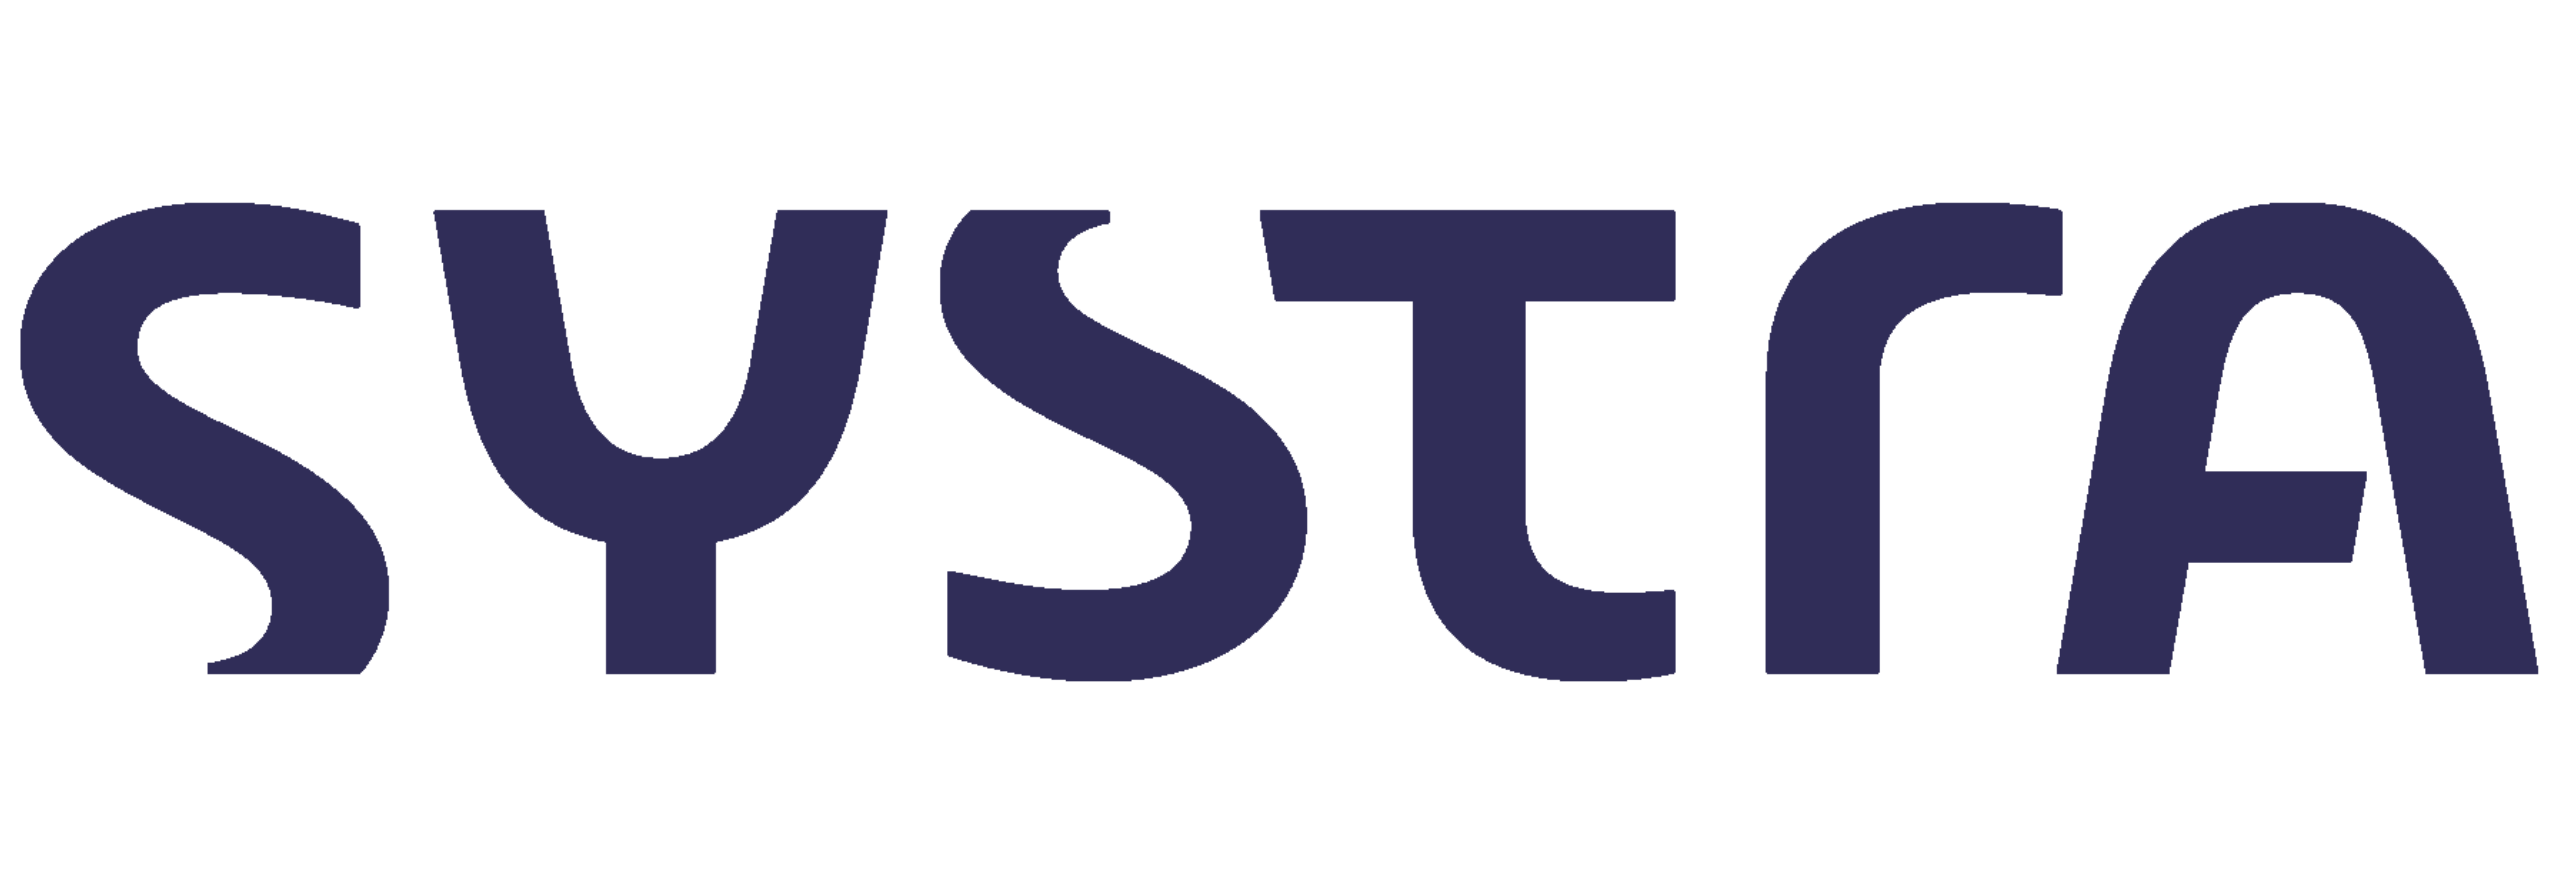 Systra logo - Tryane Analytics for internal communications